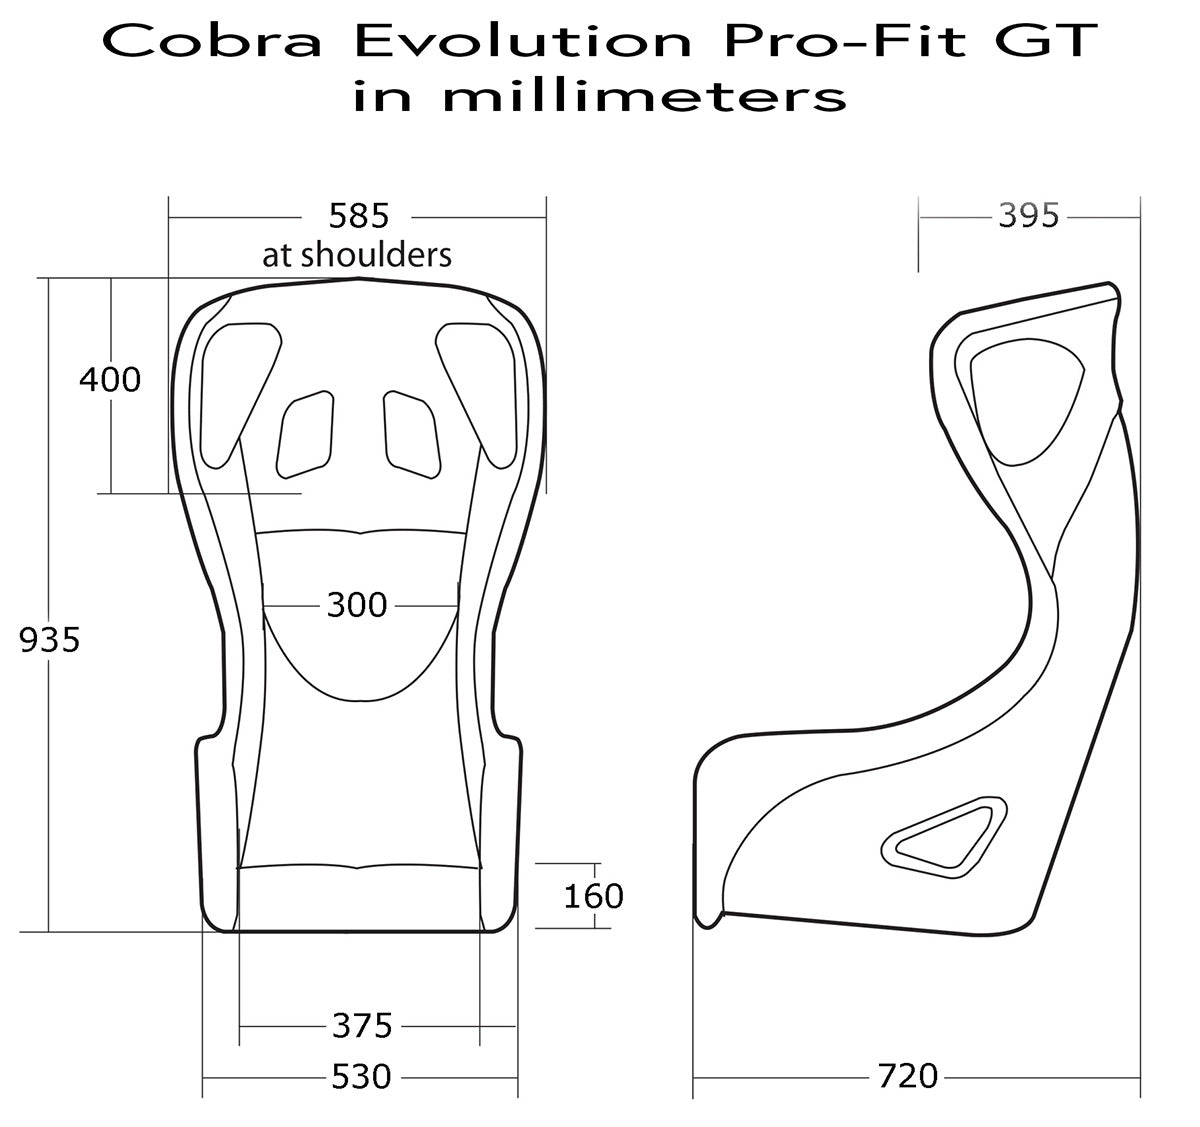 Cobra Evolution Pro-Fit Racing Seat Dimensions 2